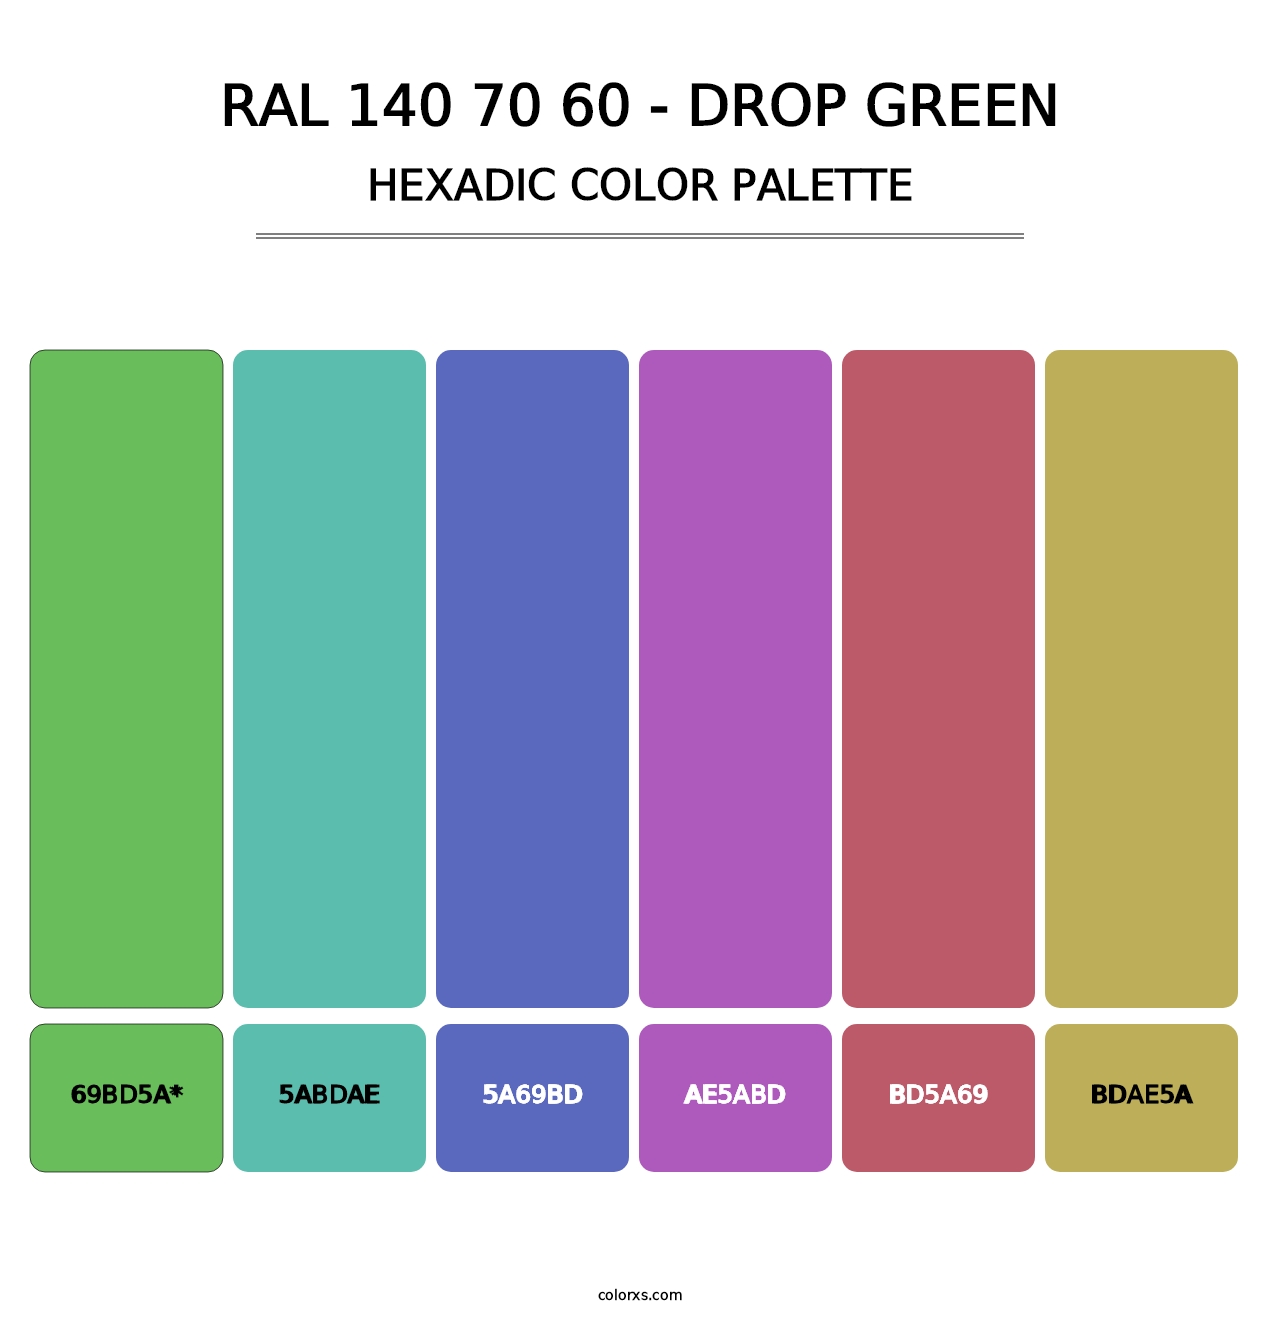 RAL 140 70 60 - Drop Green - Hexadic Color Palette